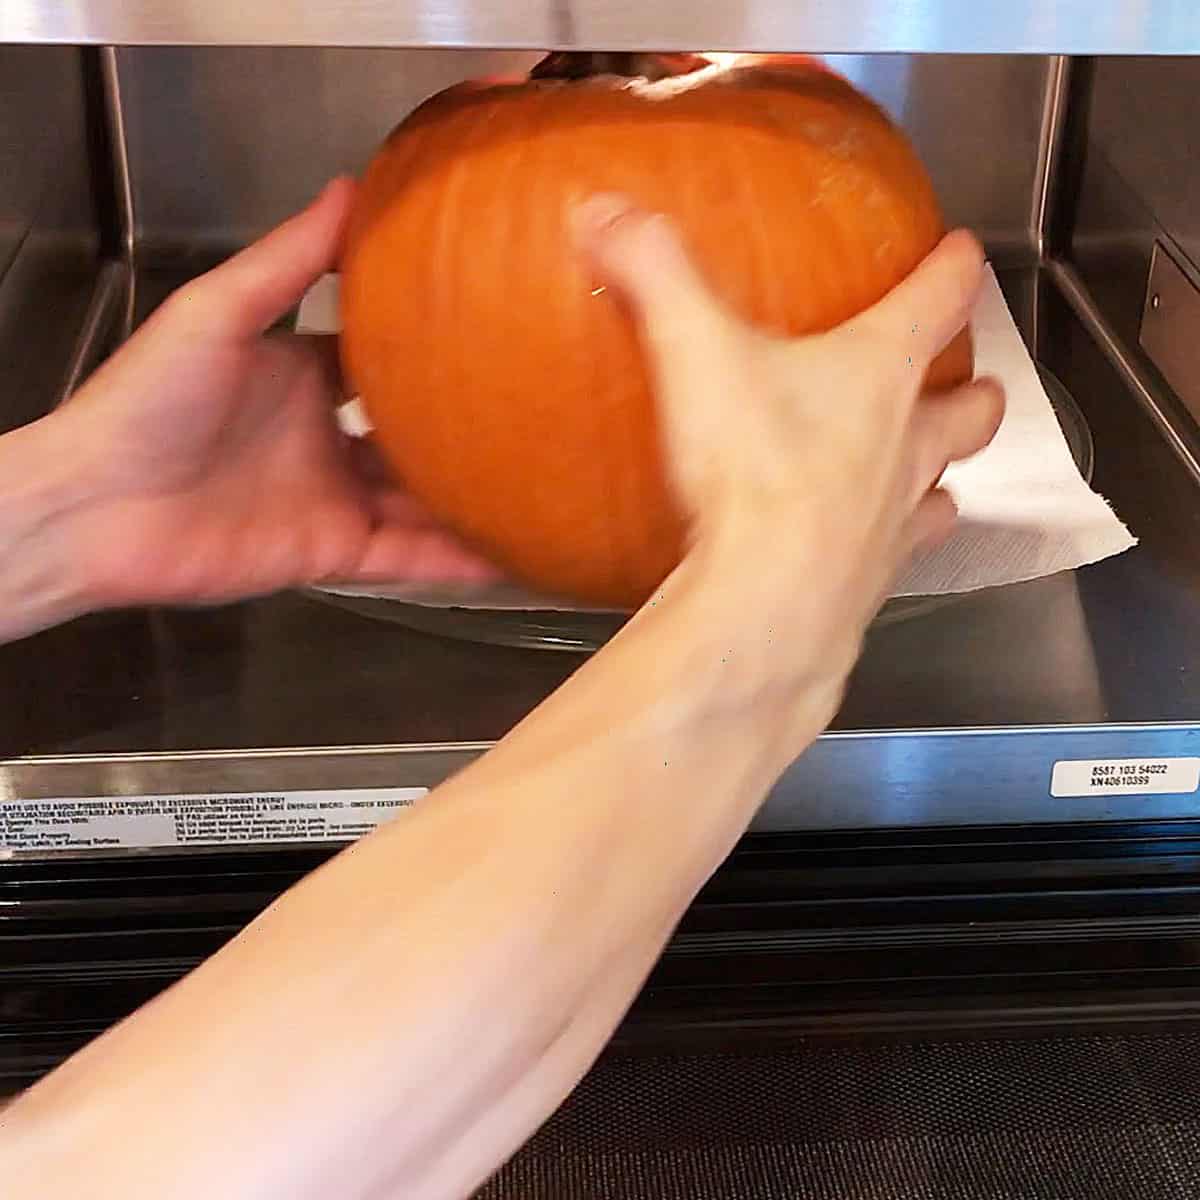 Microwave the pumpkin. 